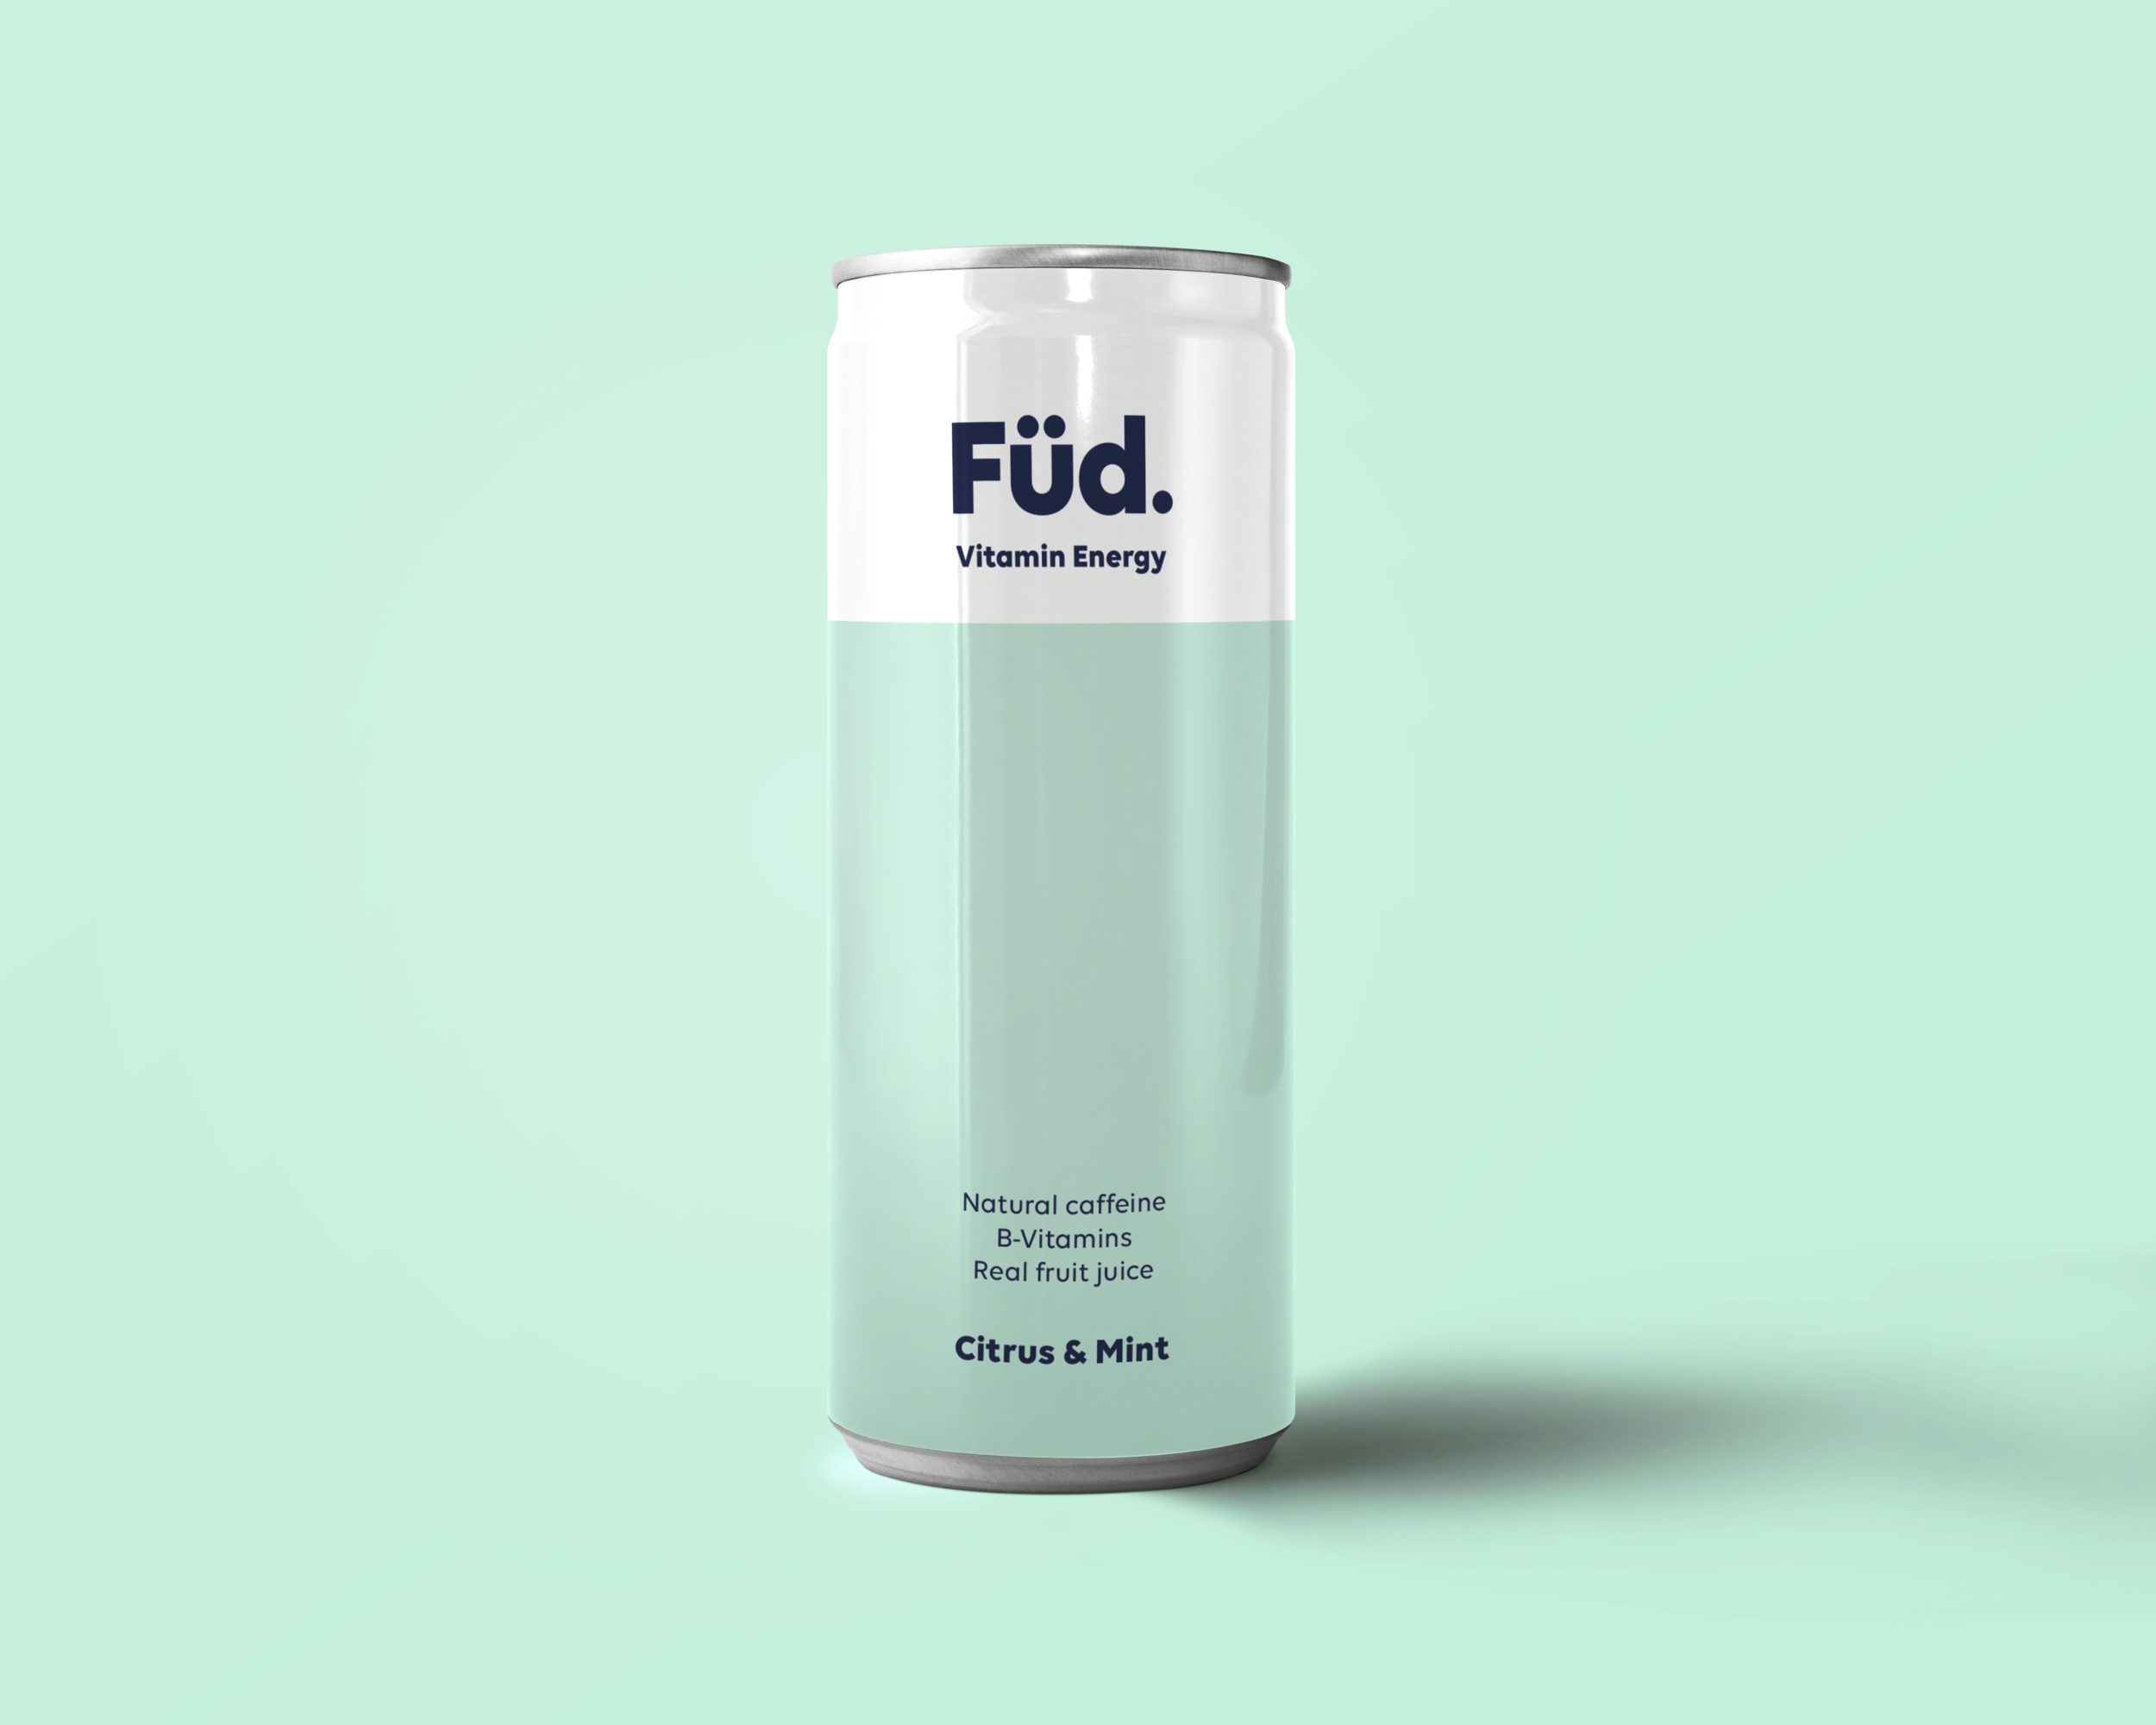 Food and beverage packaging designer UK.  A mint green can of Füd vitamin drink